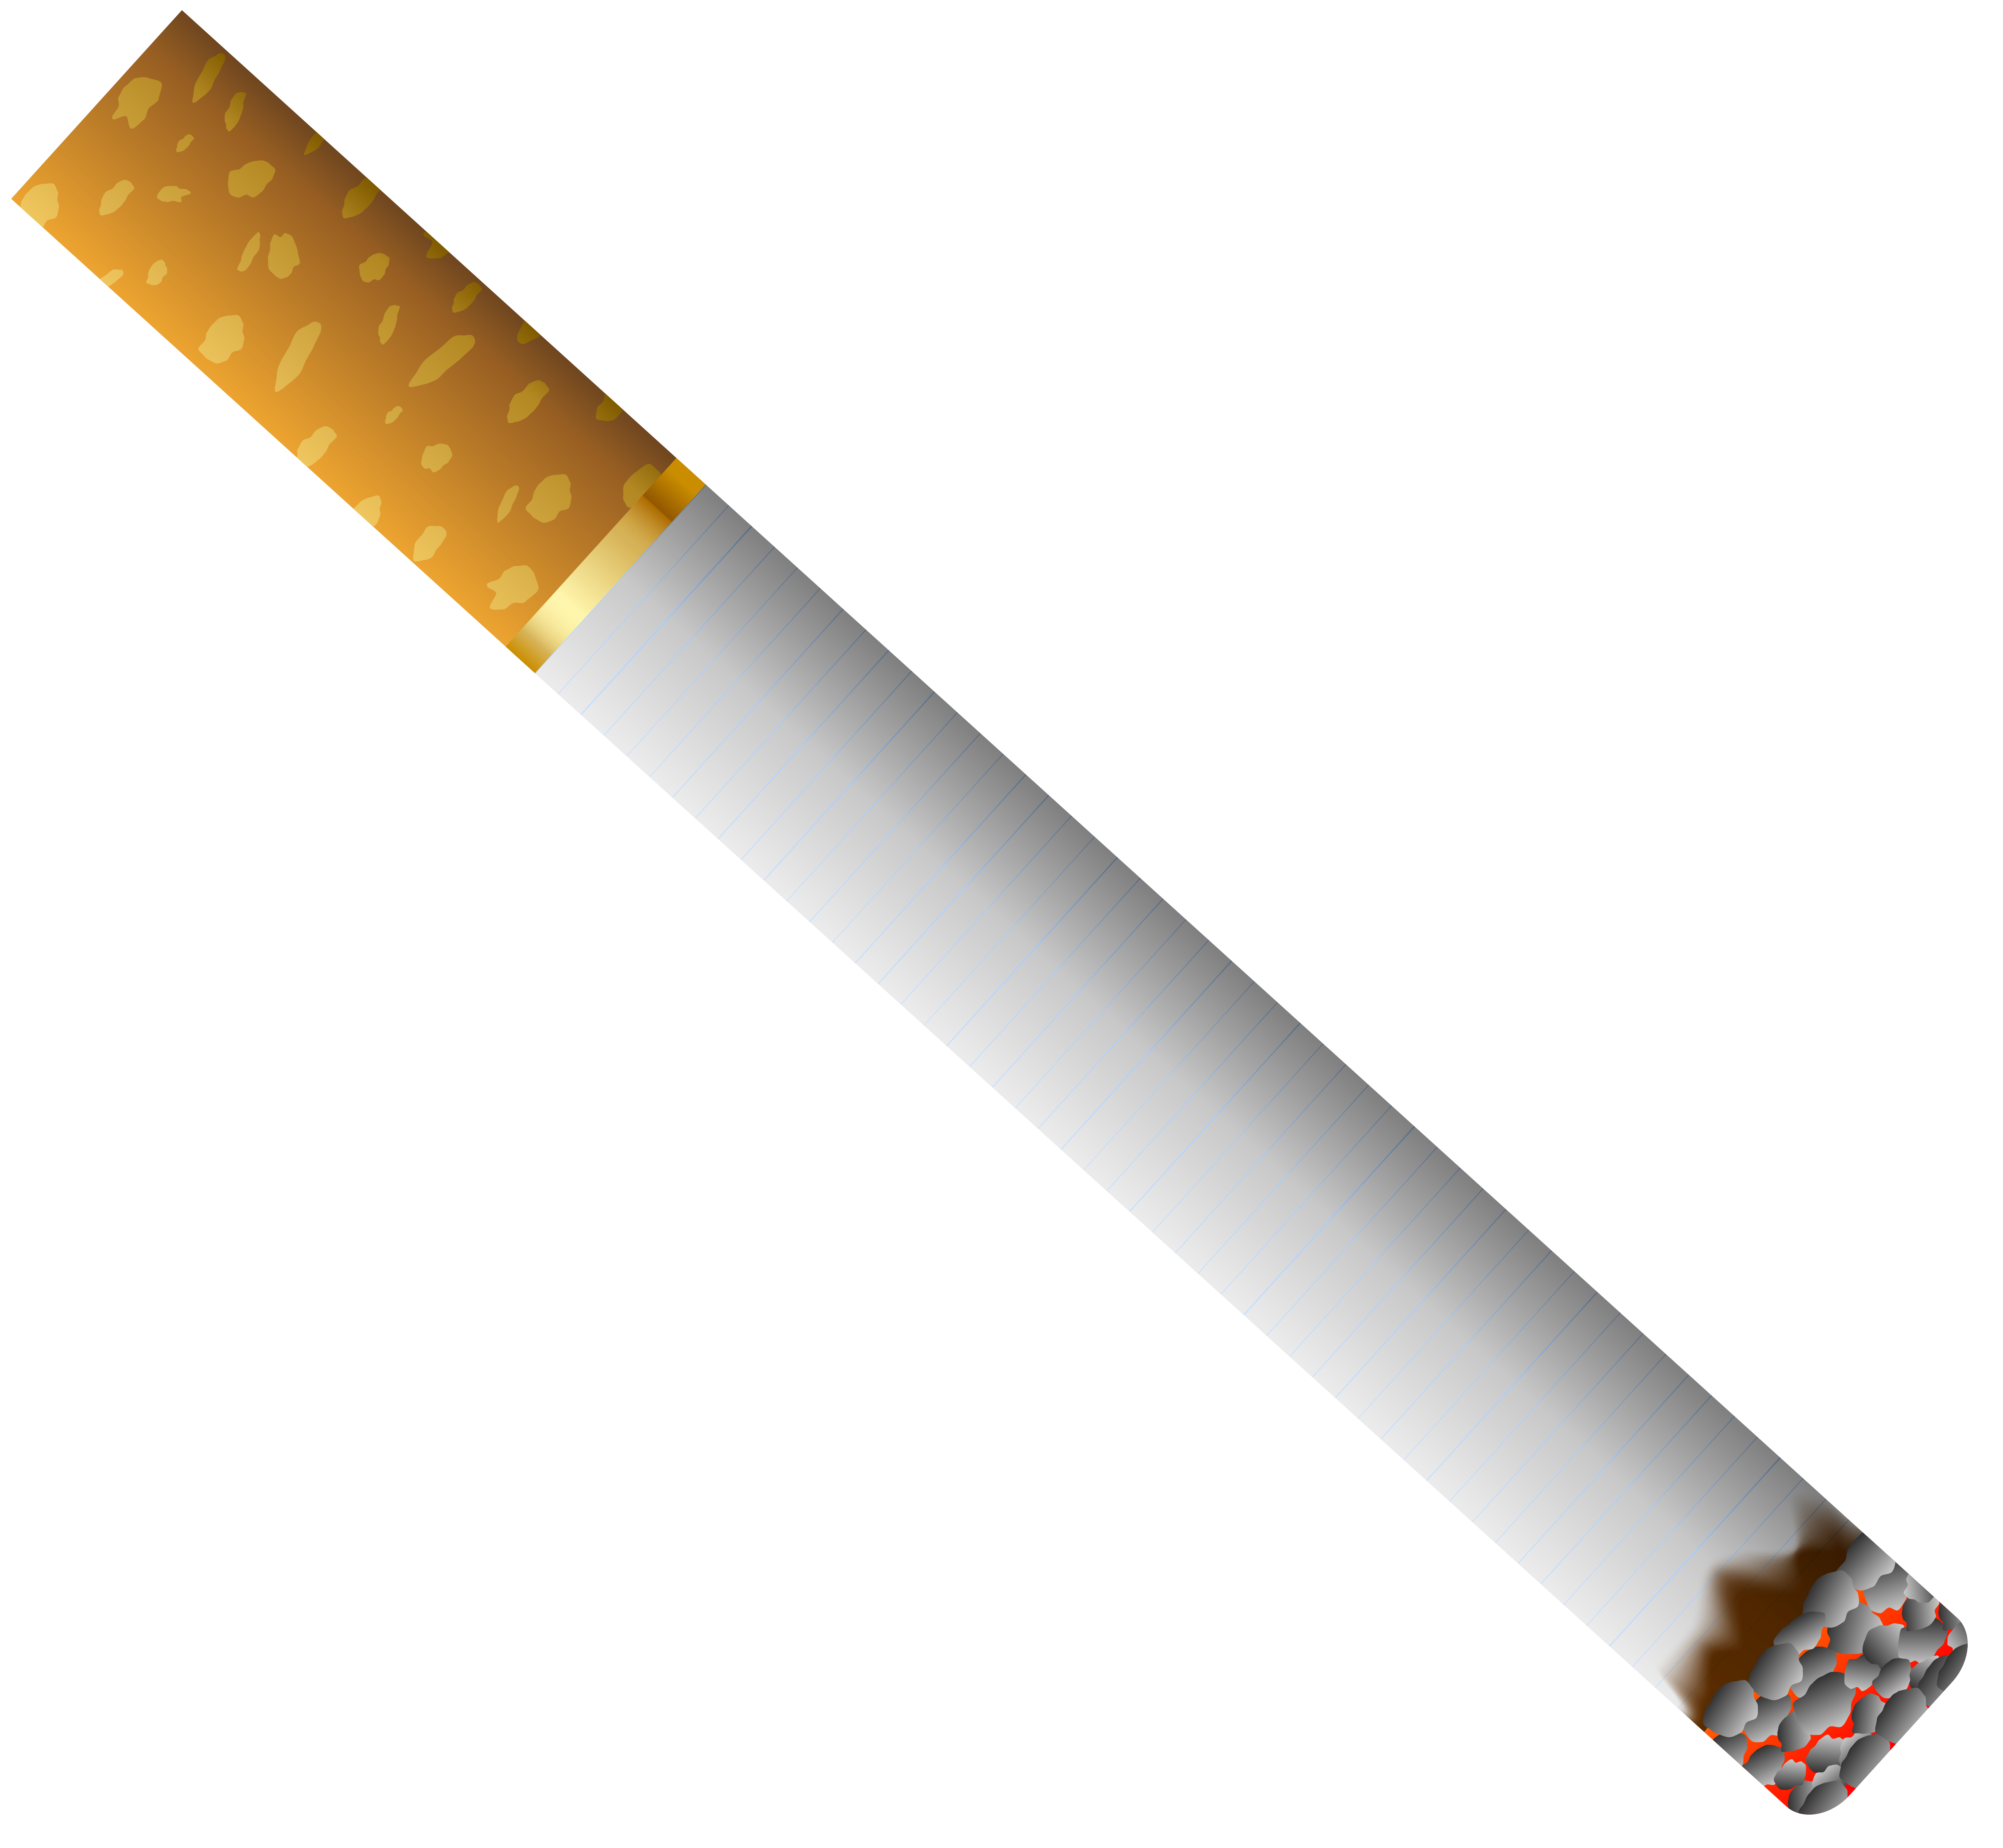  collection of no. Cigarette clipart realistic